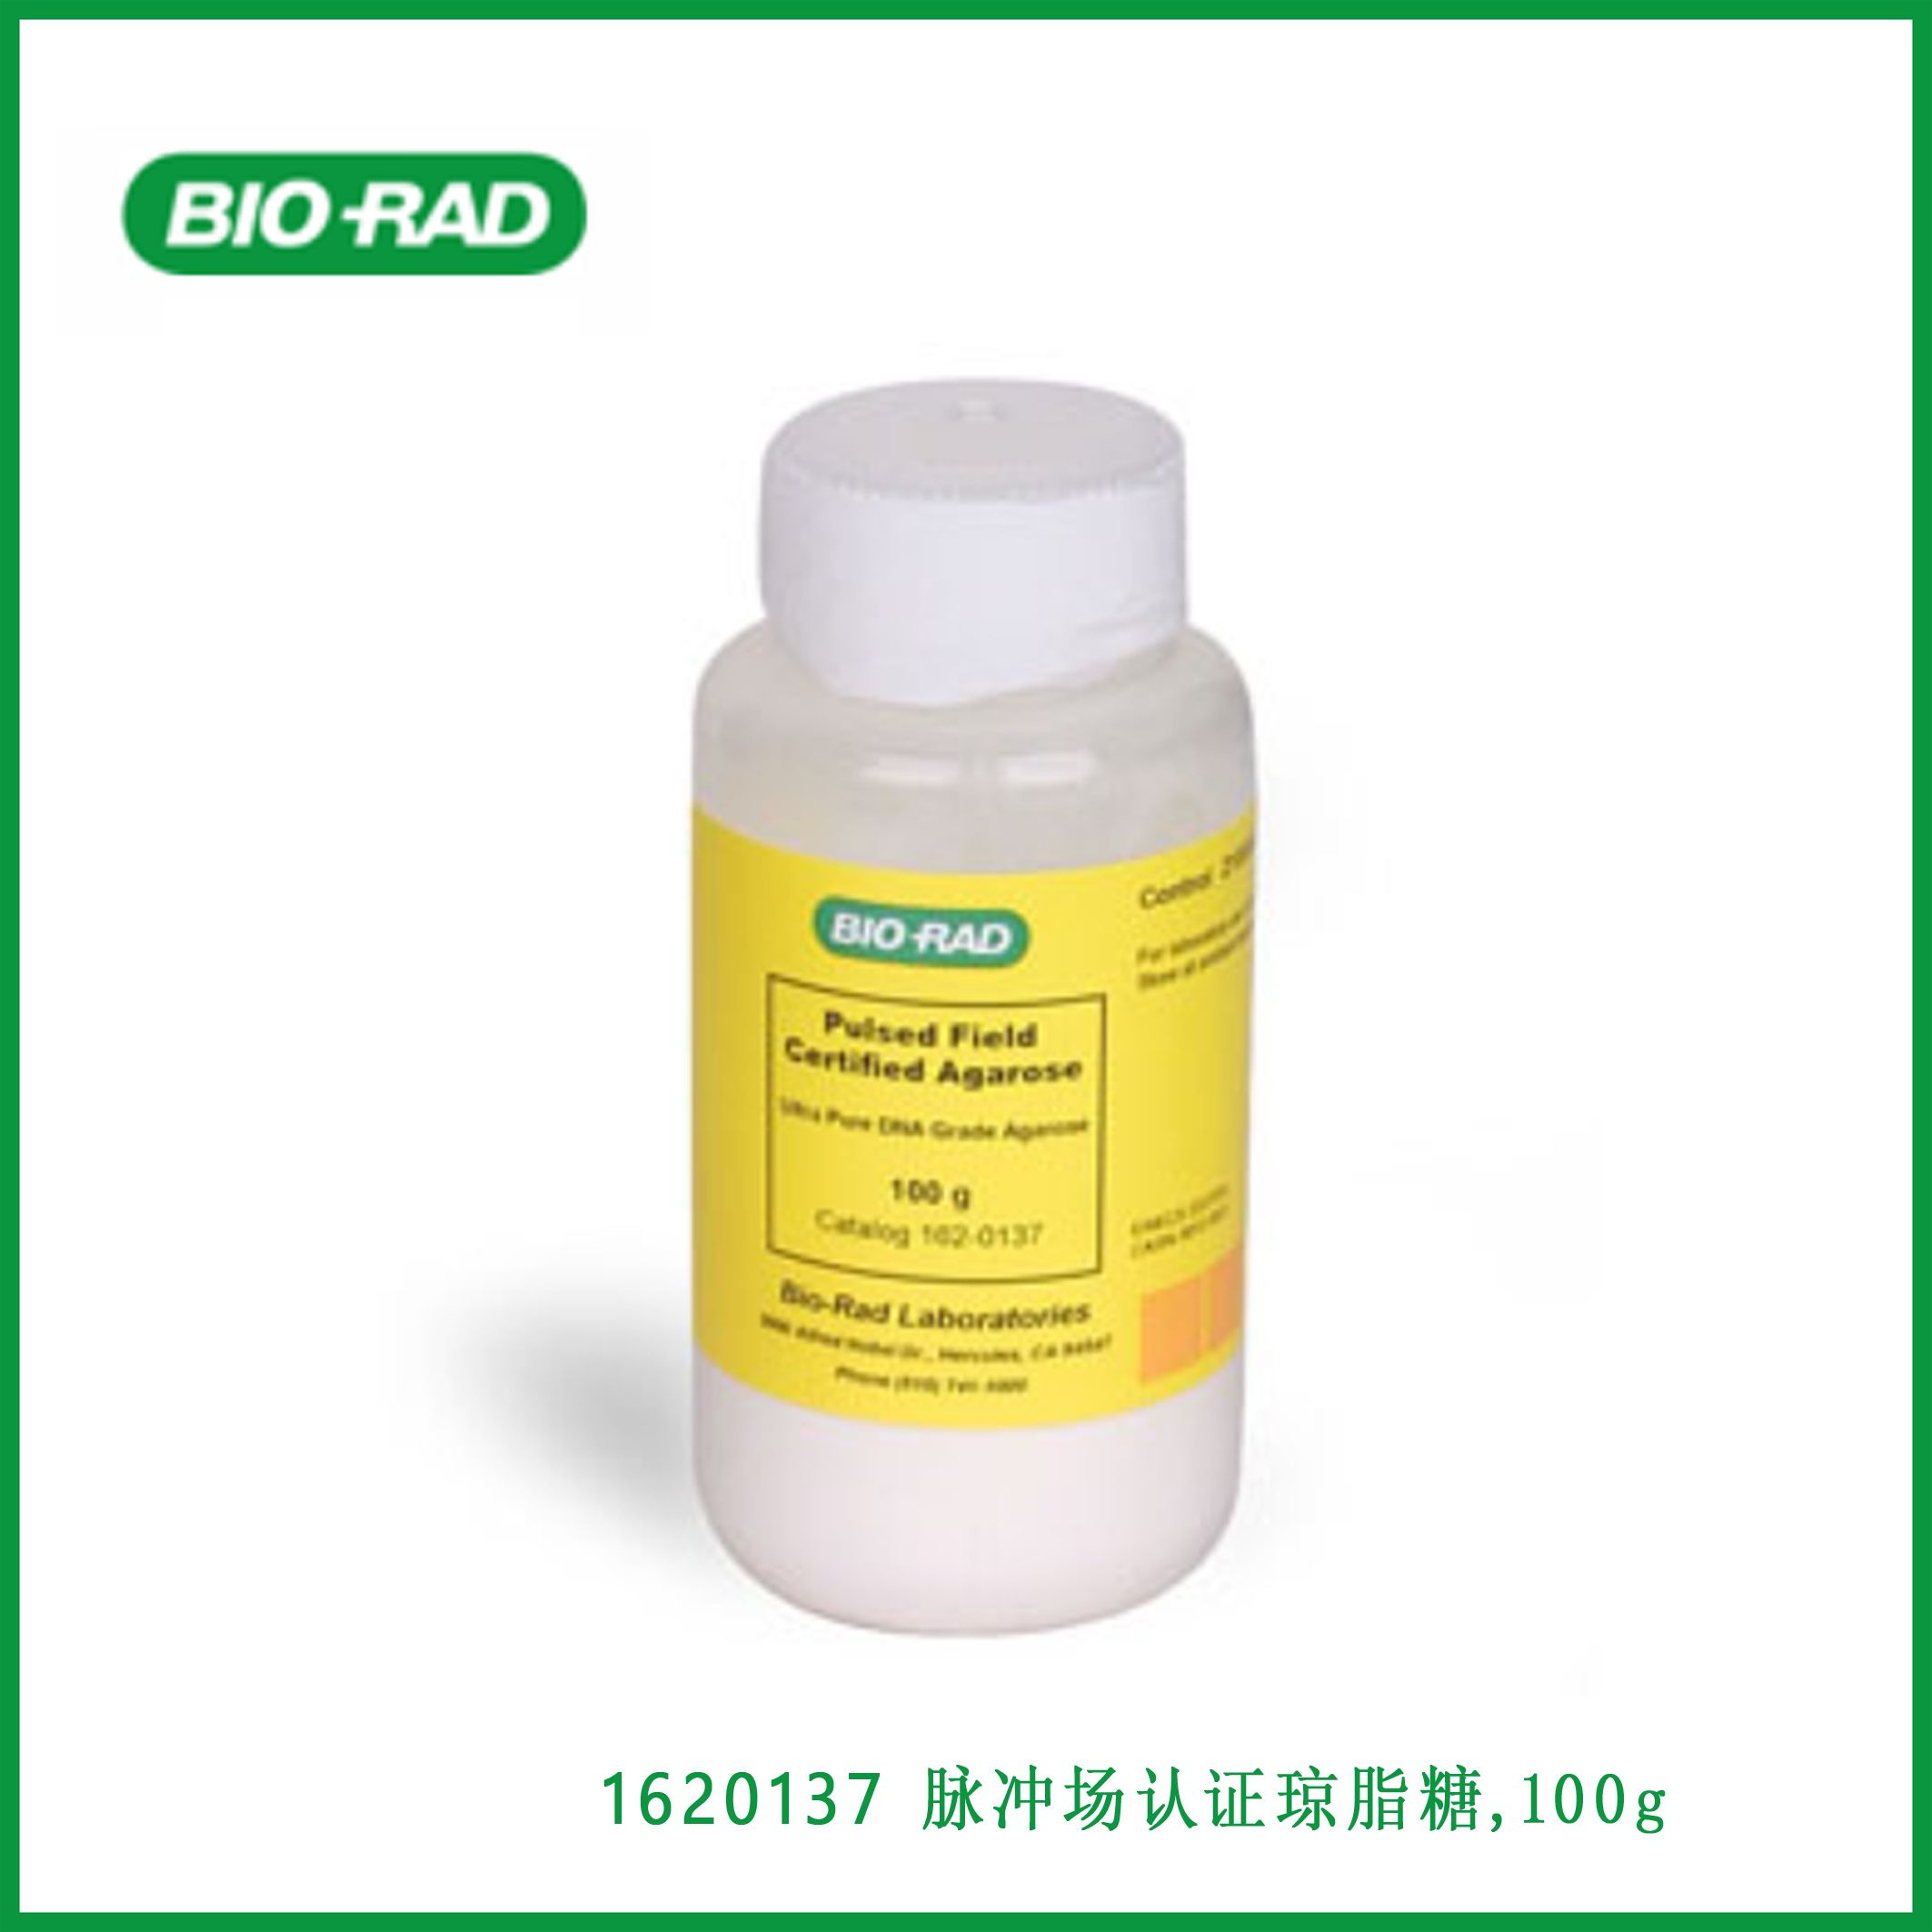 伯乐Bio-Rad1620137Pulsed Field Certified Agarose, 100 g，脉冲场认证琼脂糖，现货